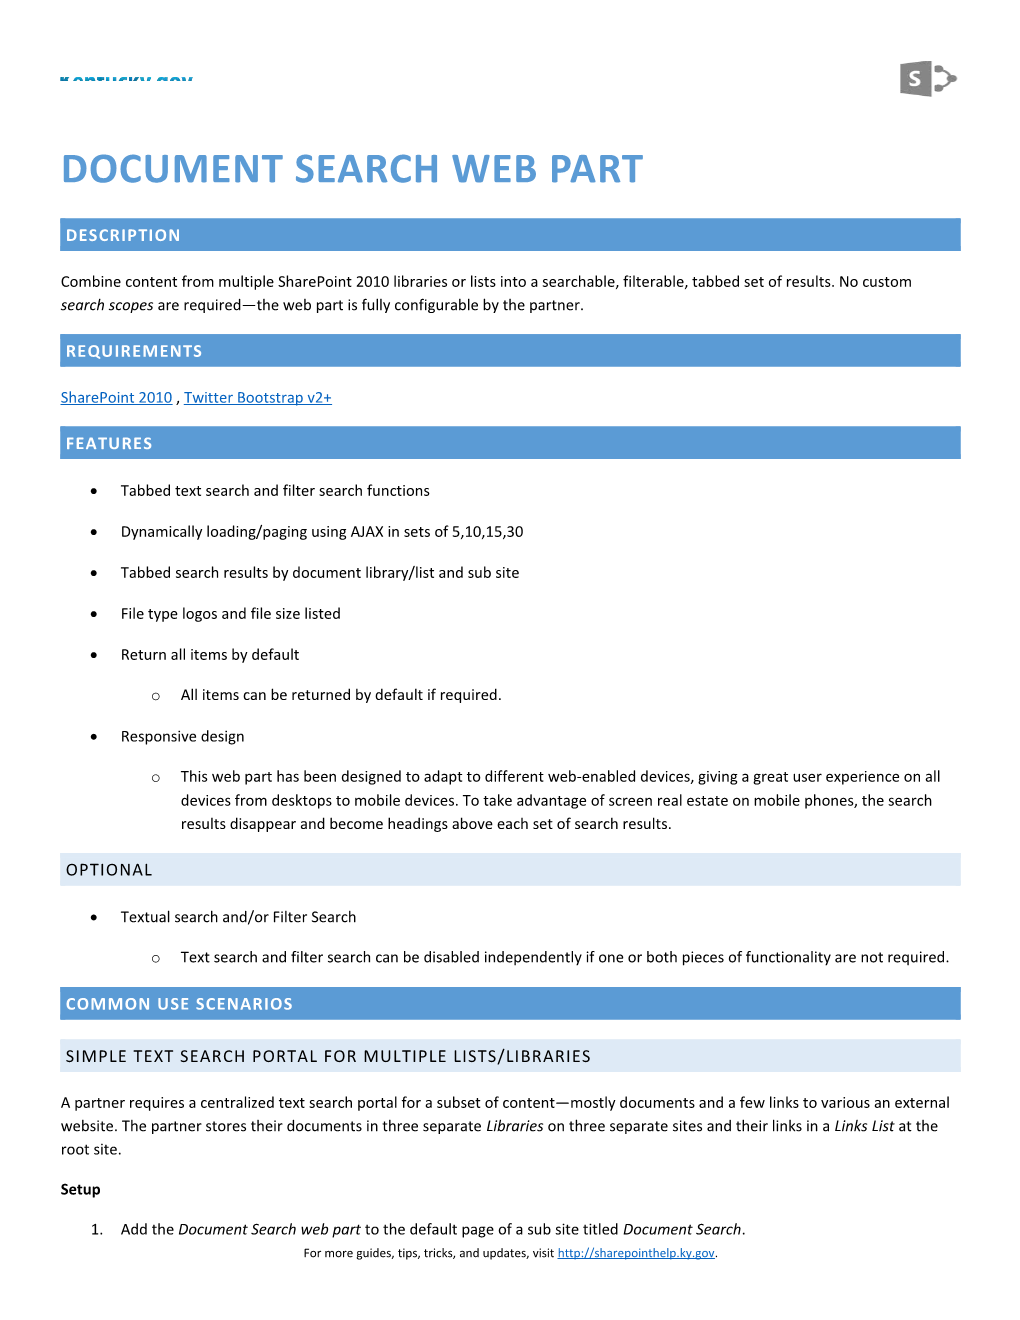 Document Search Web Part